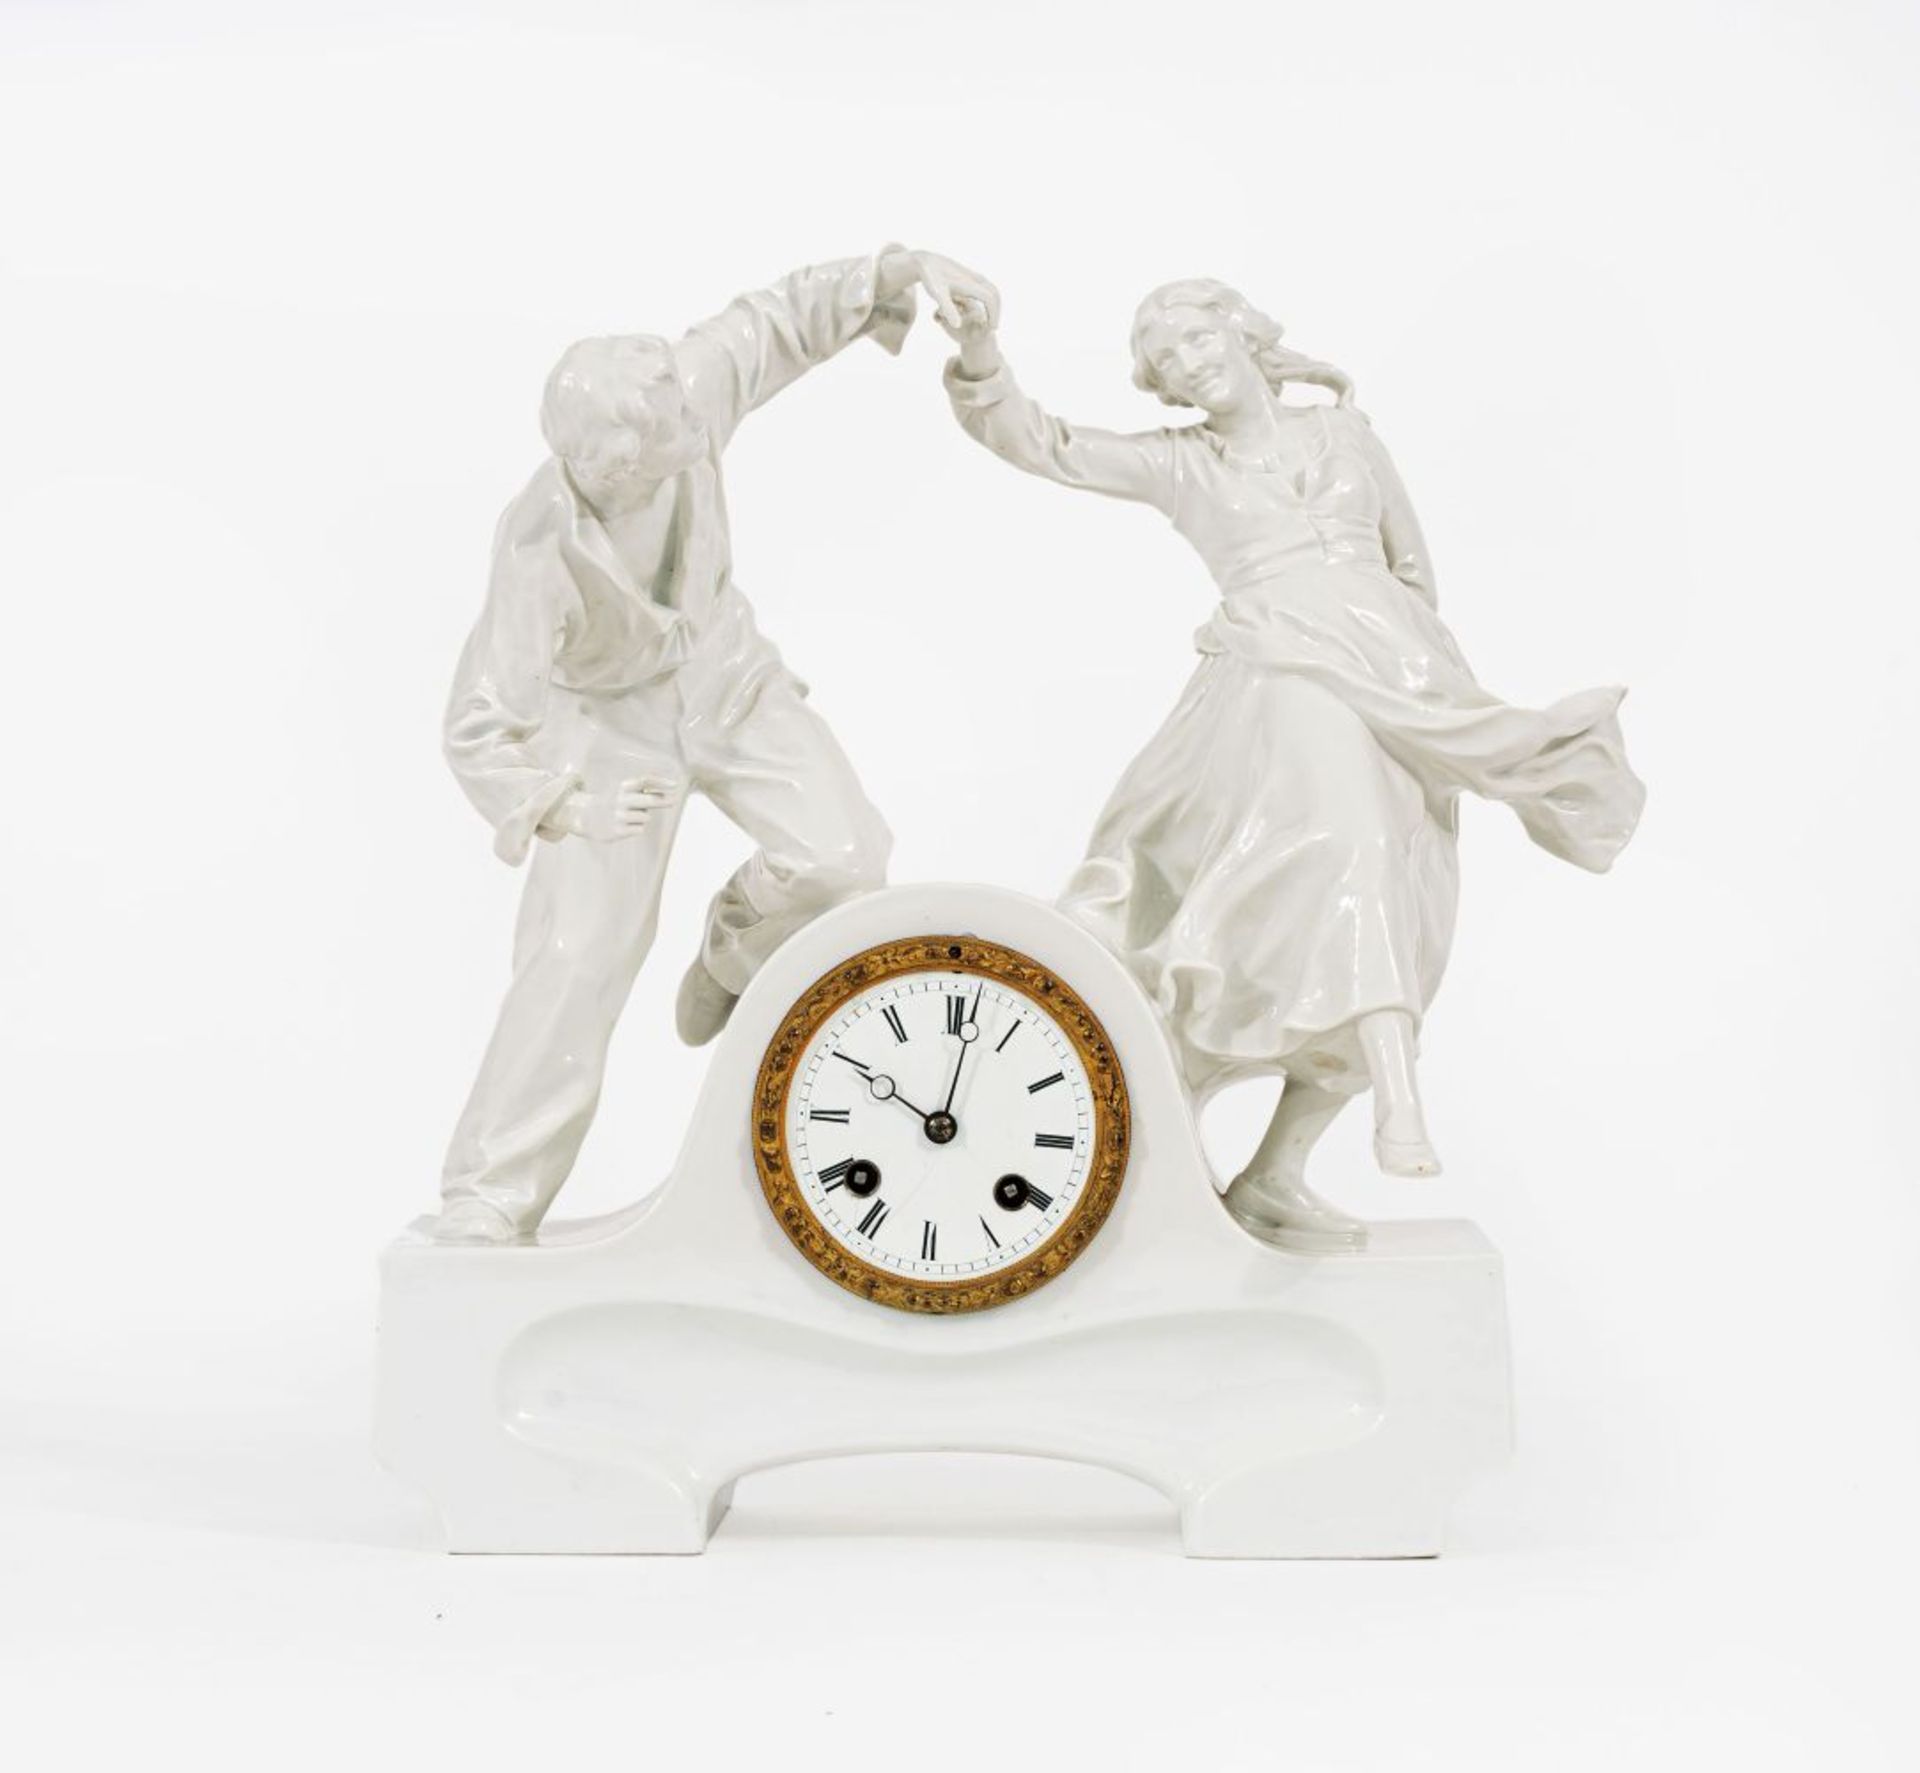 Hentschel, Konrad (Cölln b. Meißen 1872 - Meißen 1907). Table clock with dancing Farmer Couple.